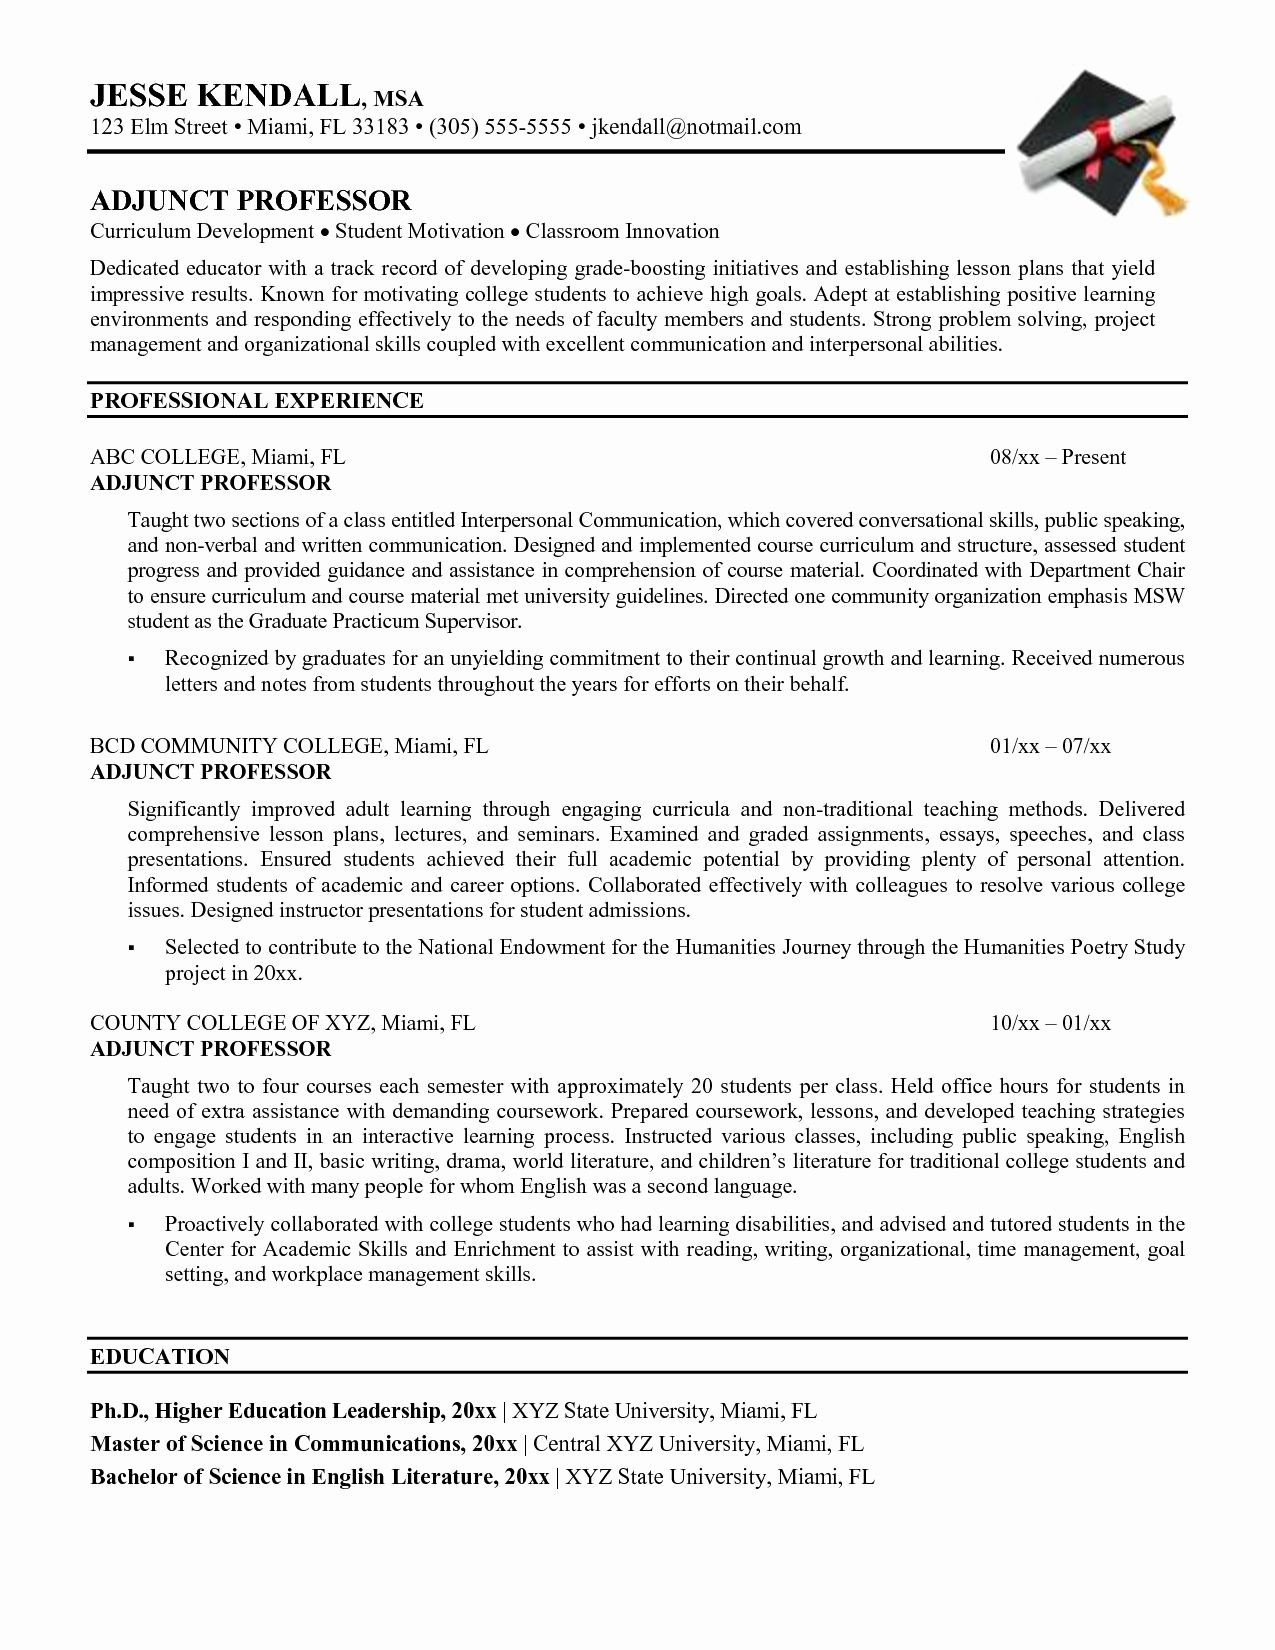 Sample Resume for College Instructor Position Entry Level Adjunct Professor Resume Awesome Sample Resume for …